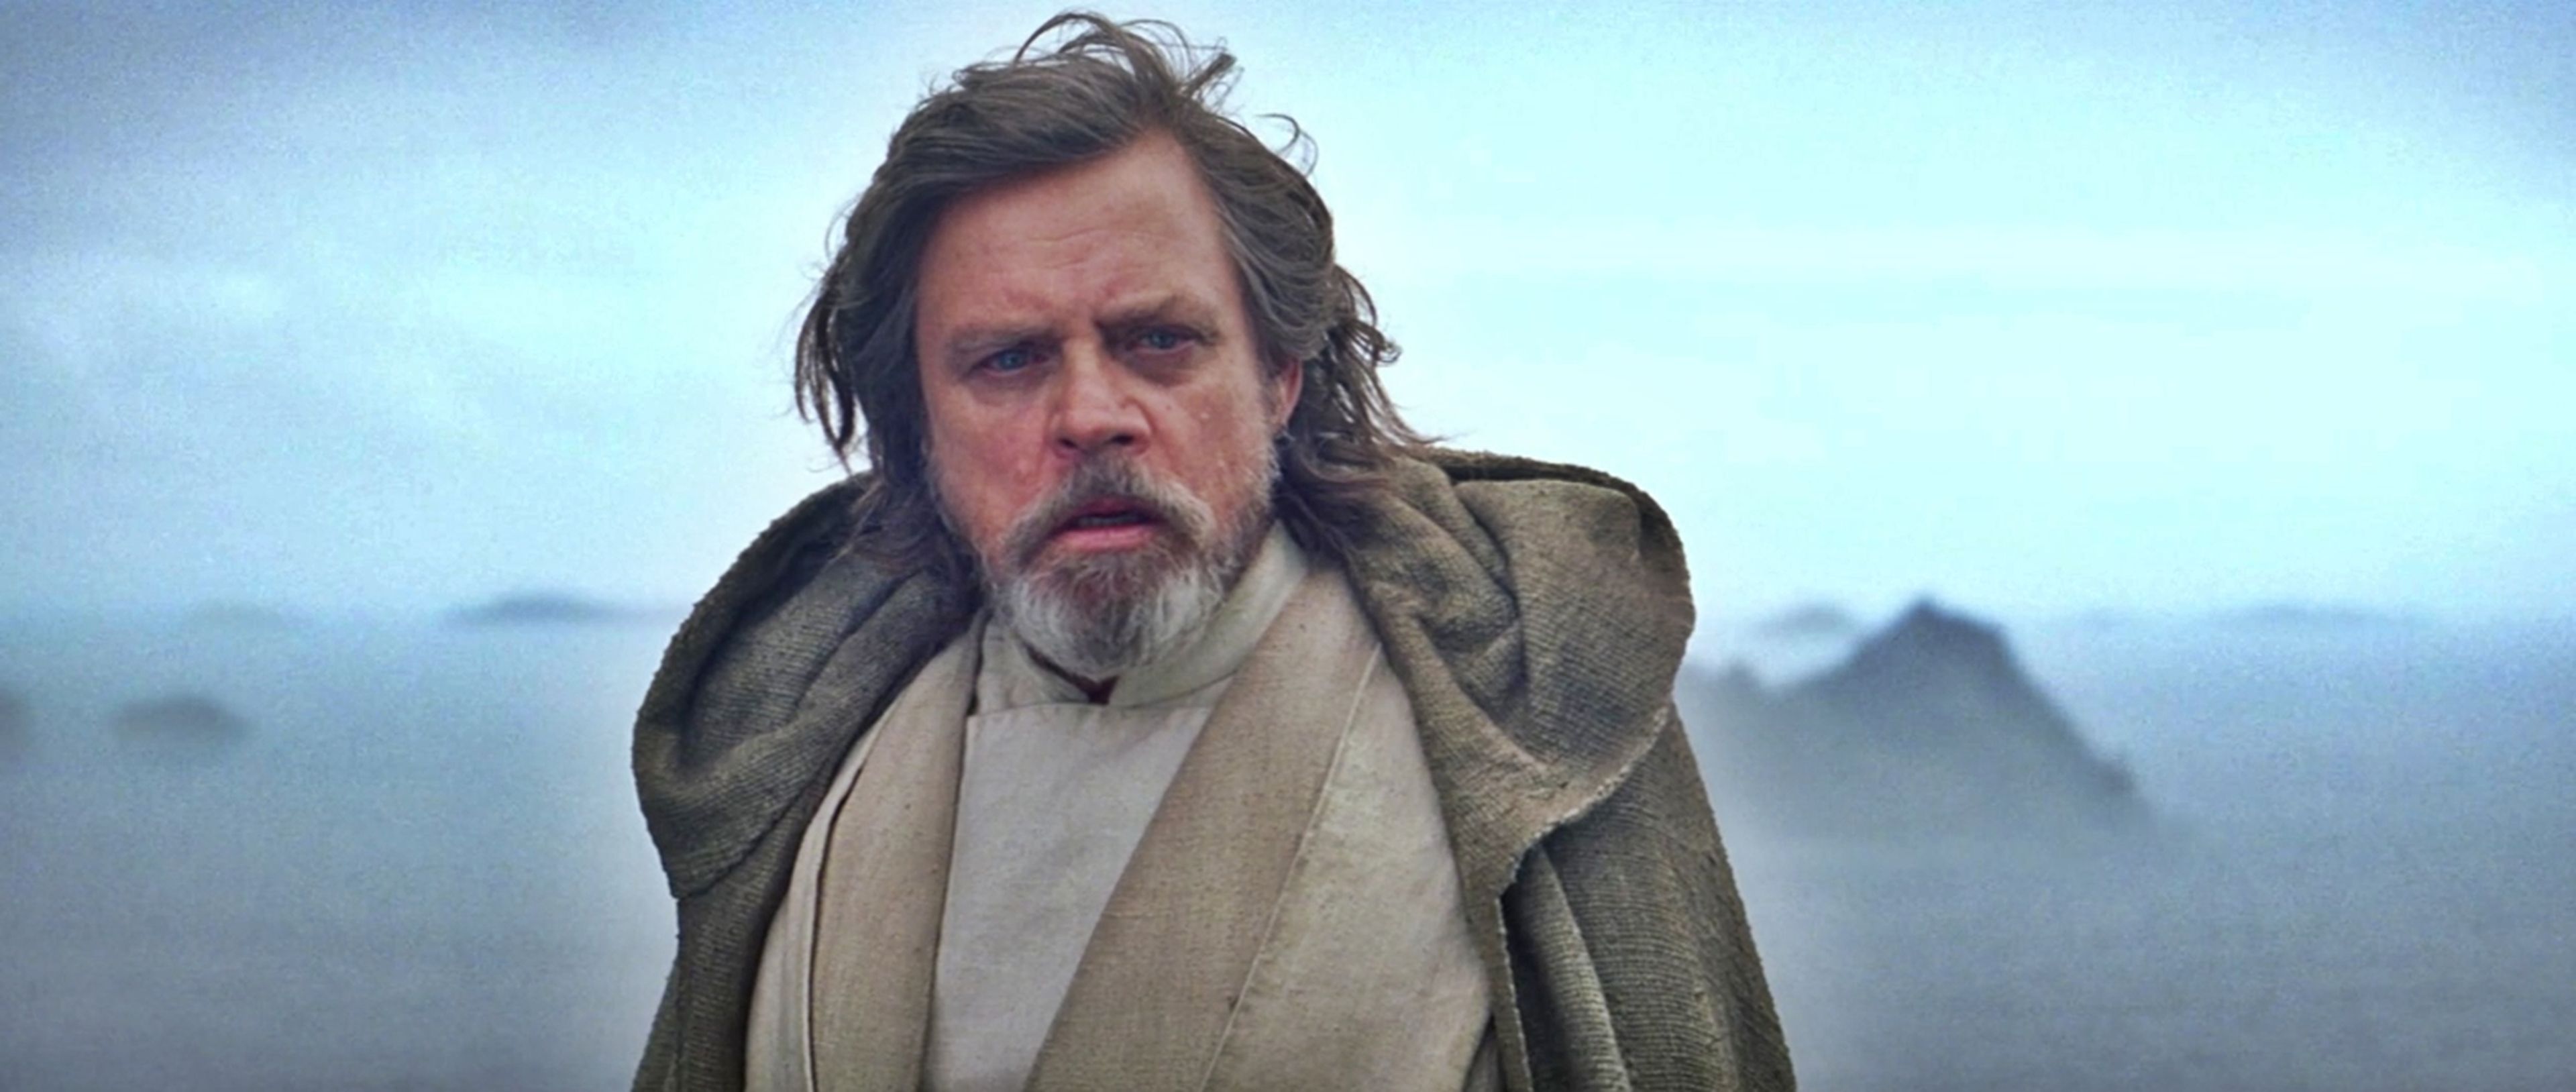 Luke Skywalker en Star Wars El despertar de la Fuerza